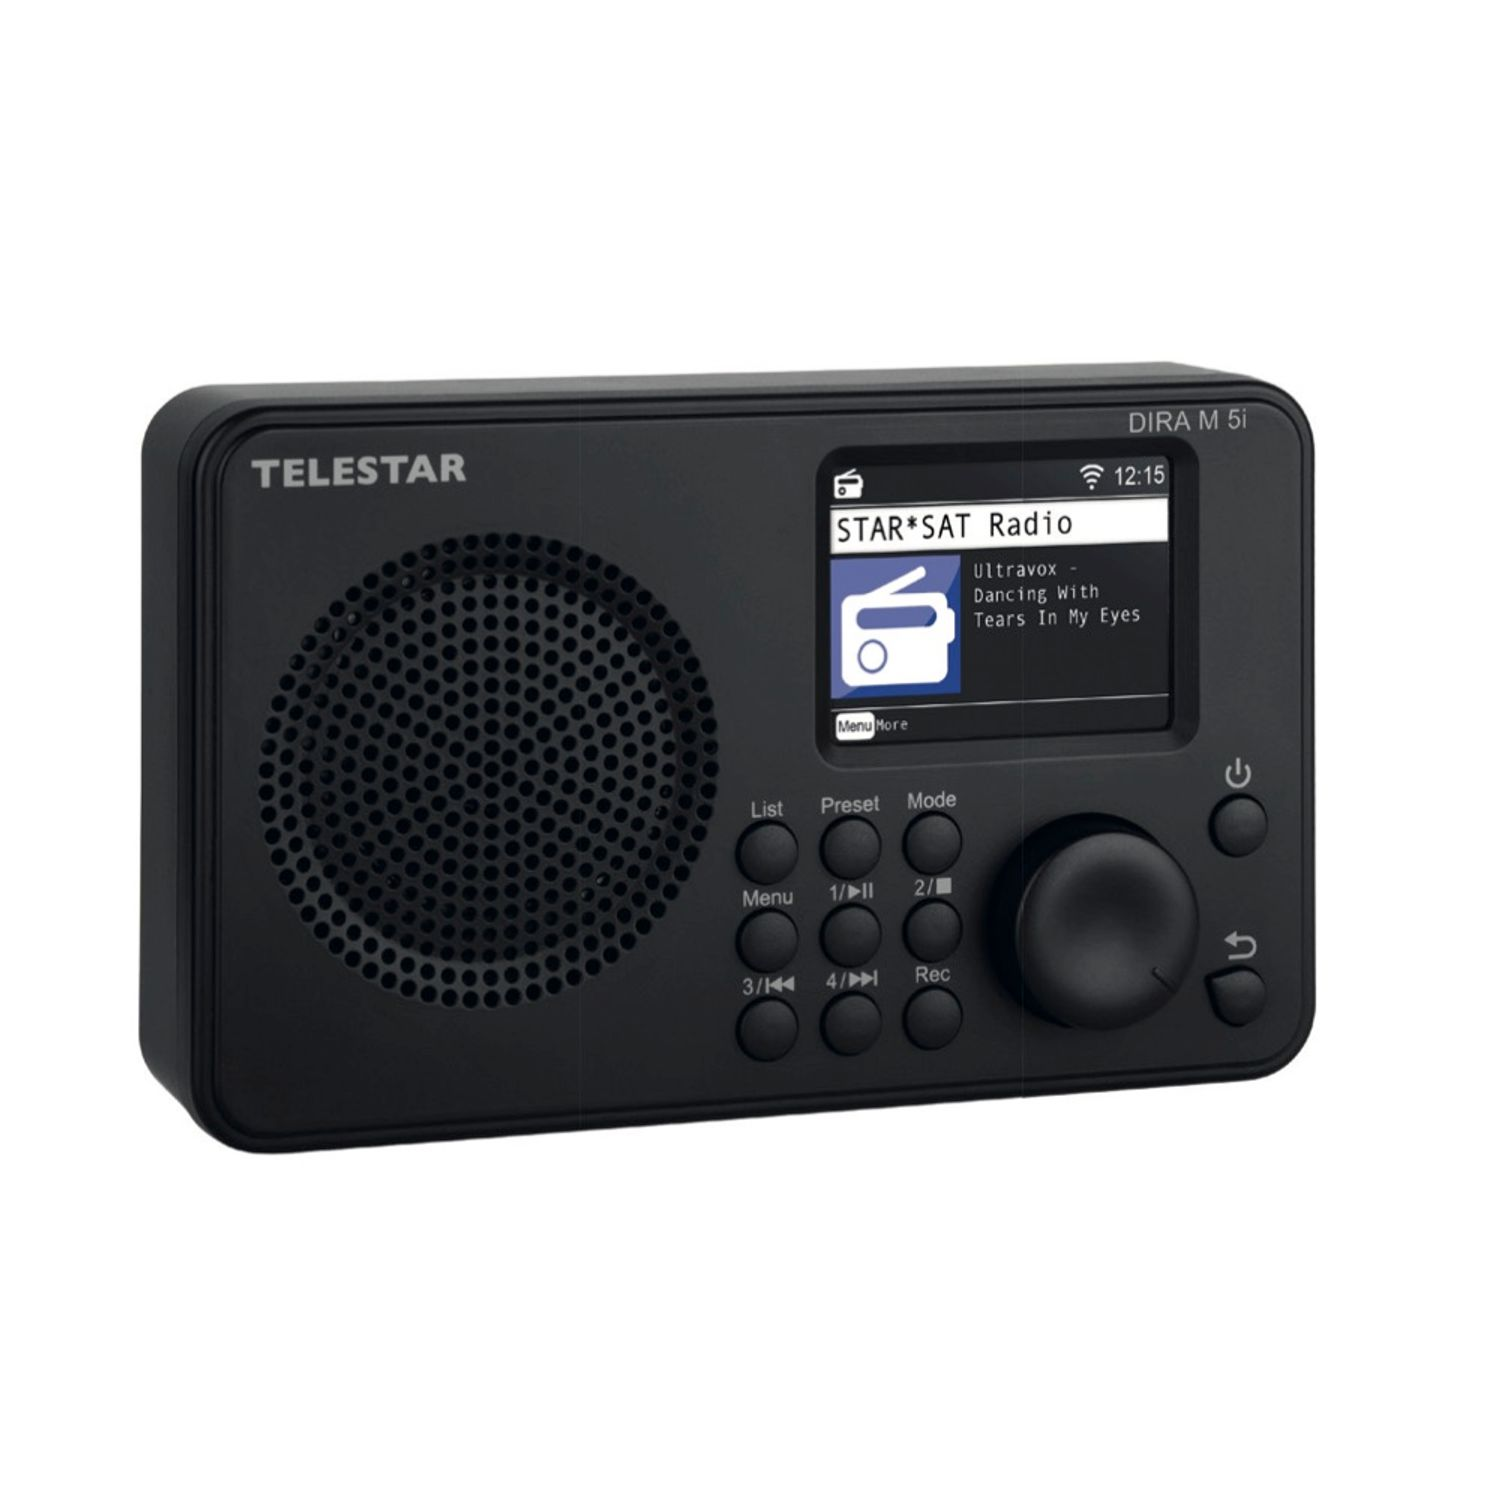 TELESTAR DIRA M Internetradio, Internet Bluetooth, Radio, schwarz 5i